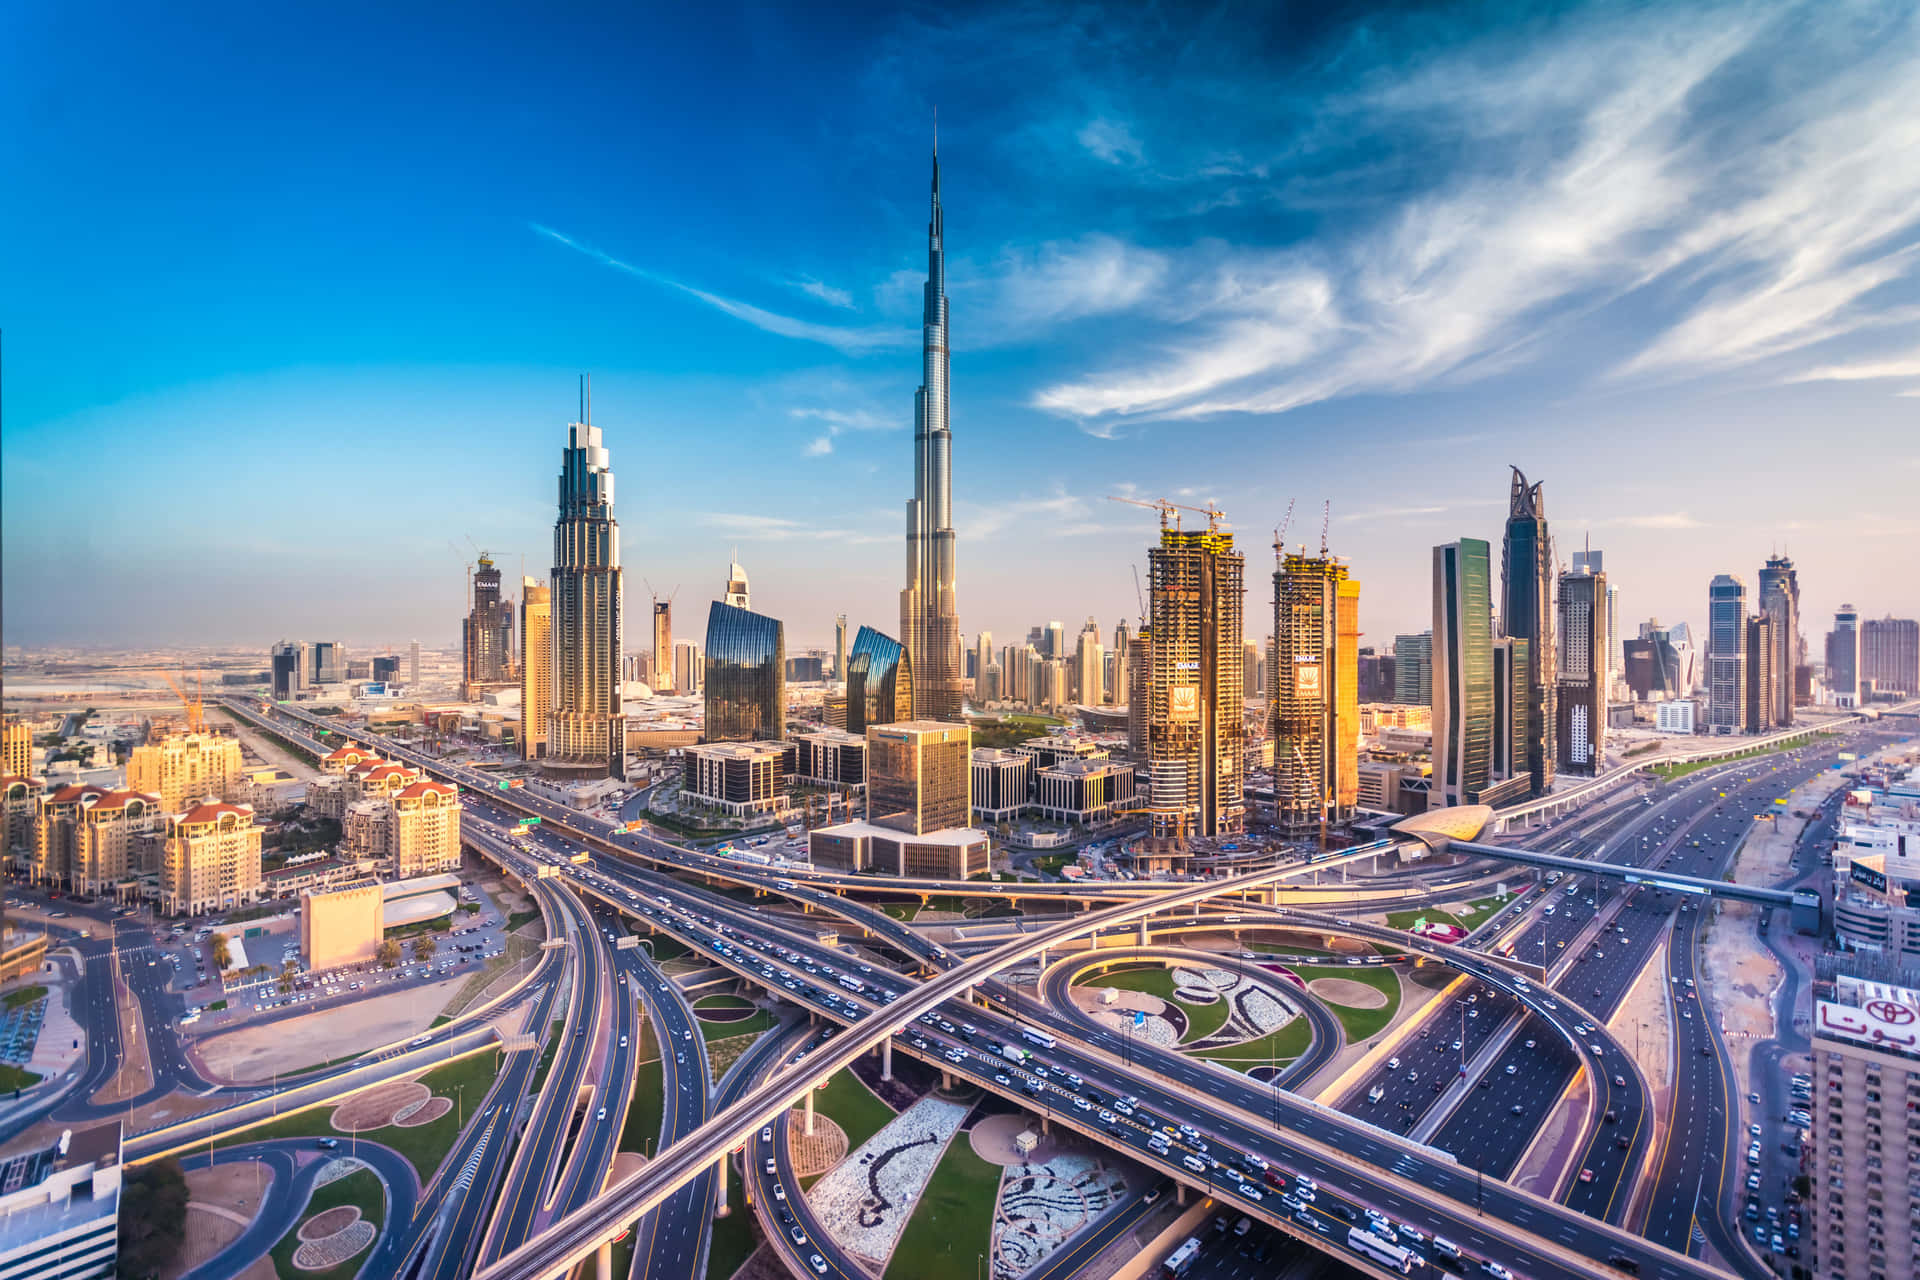 A picturesque view of Dubai, UAE